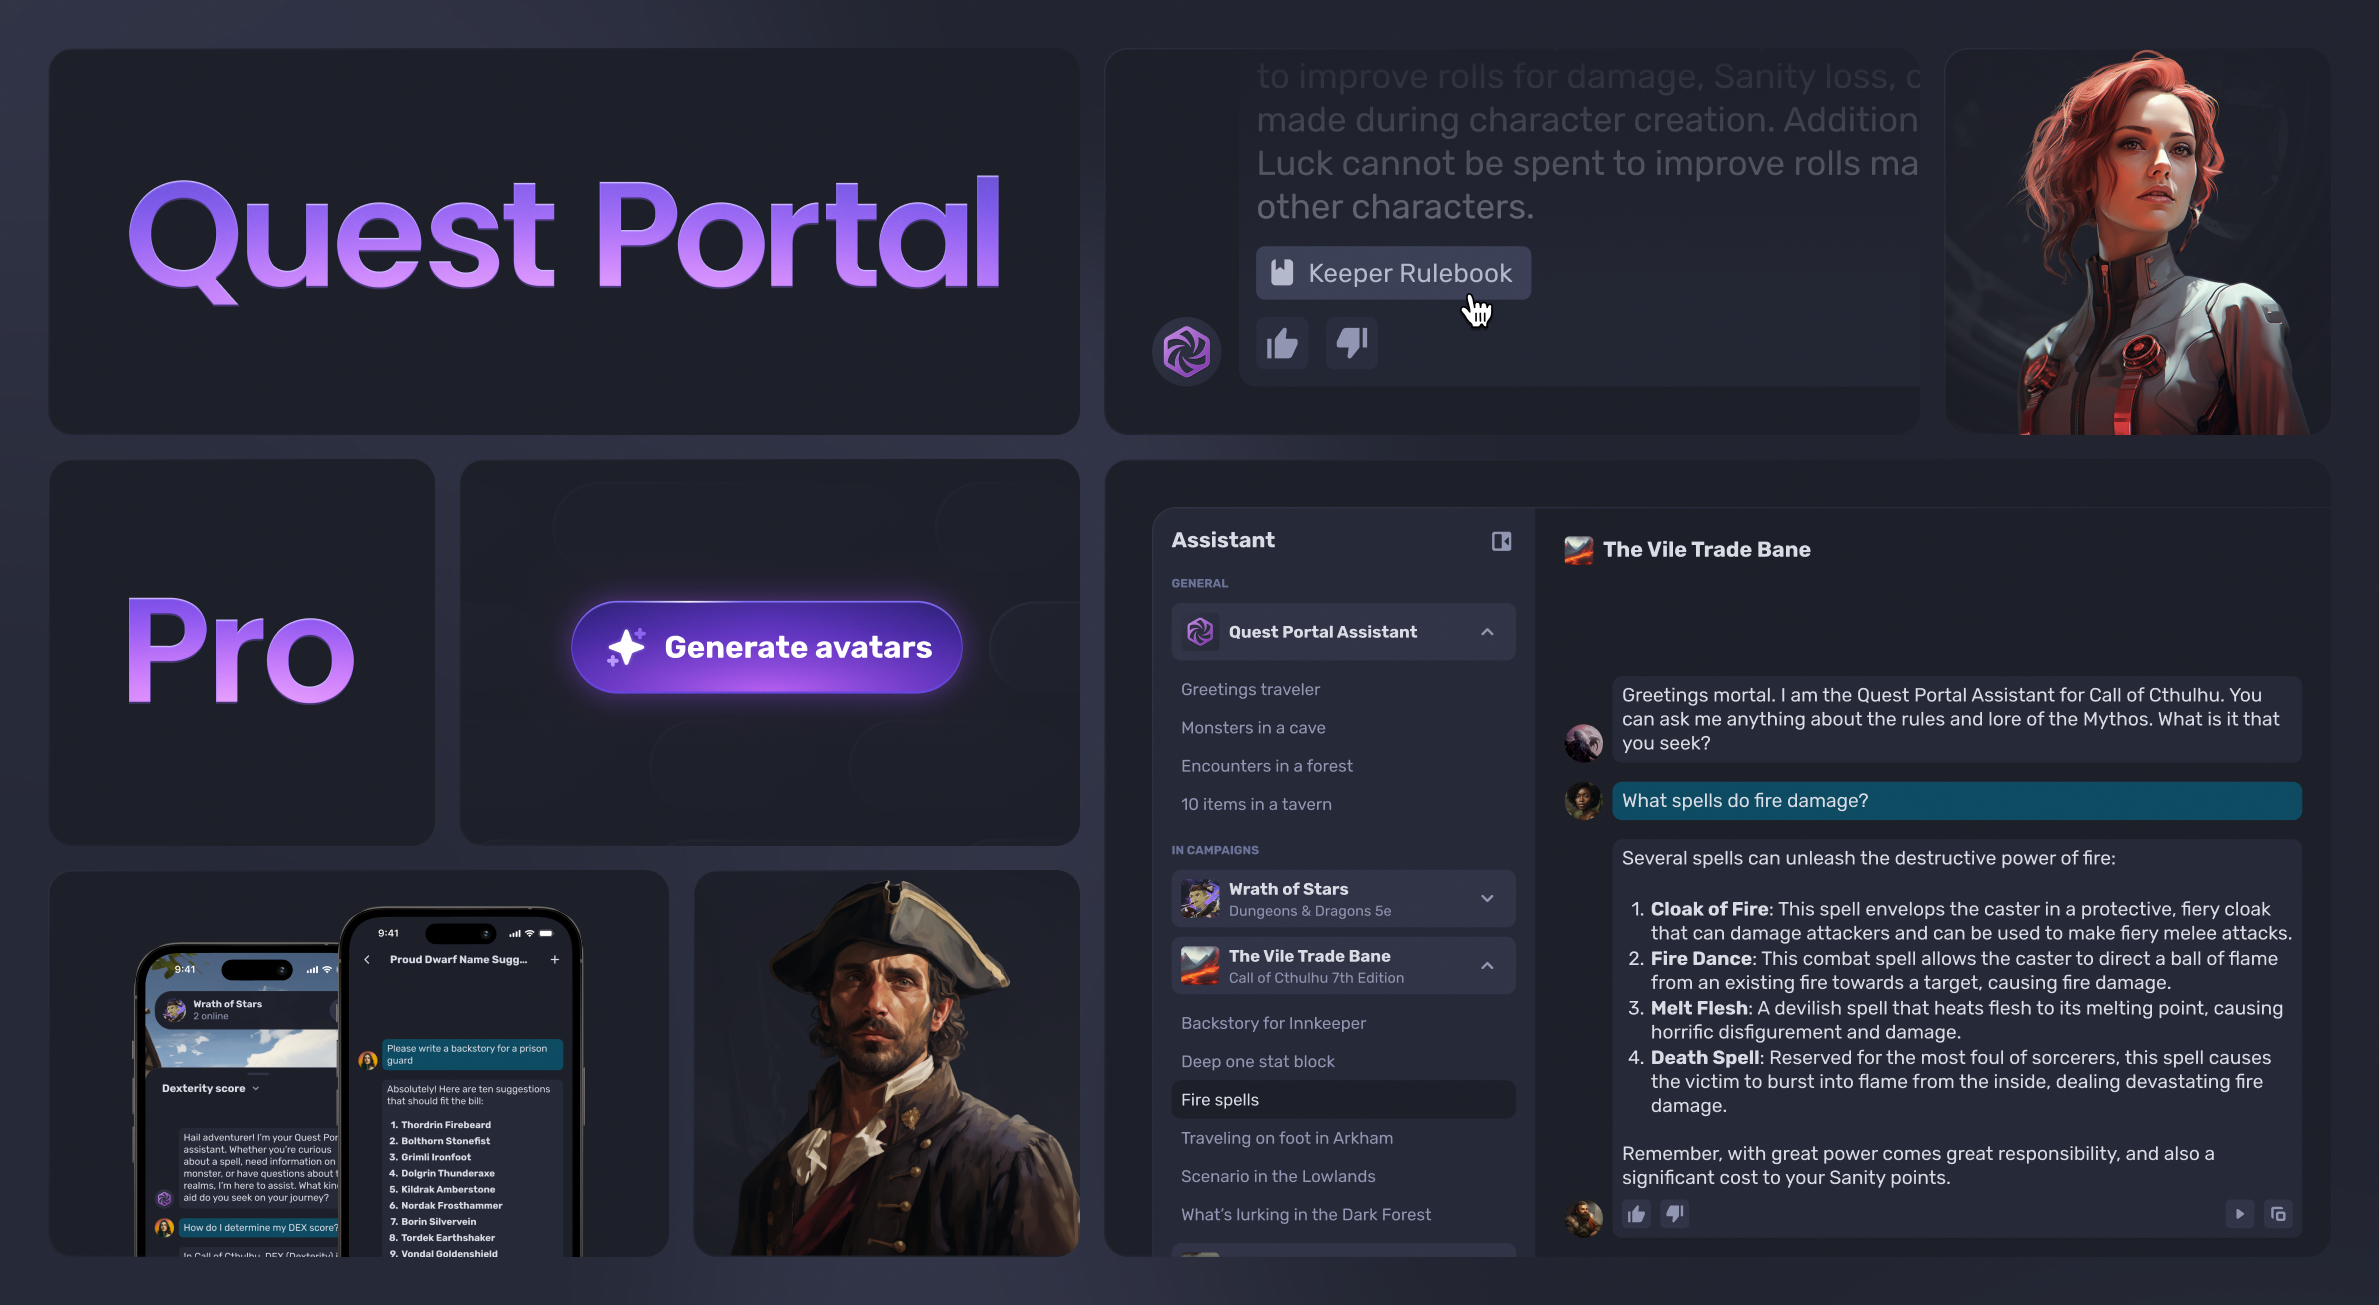 Quest Portal has launched